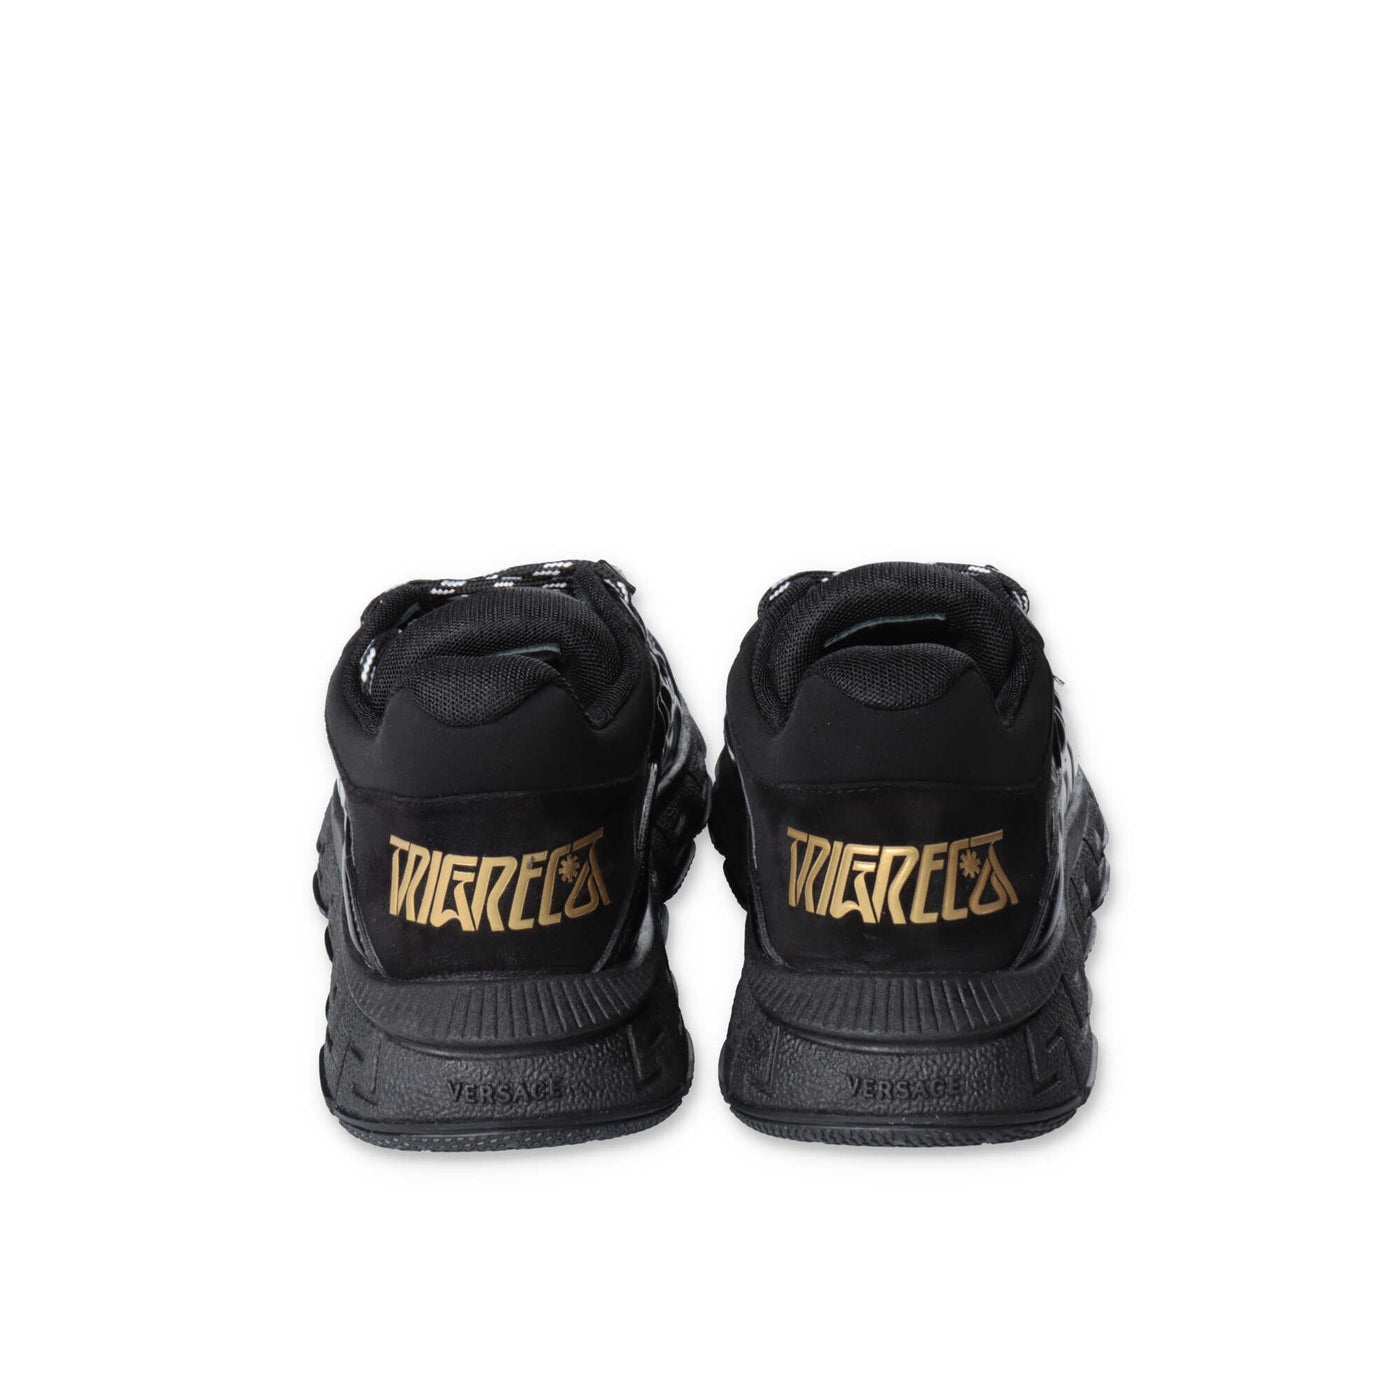 Black calf leather boy VERSACE sneakers | Carofiglio Junior